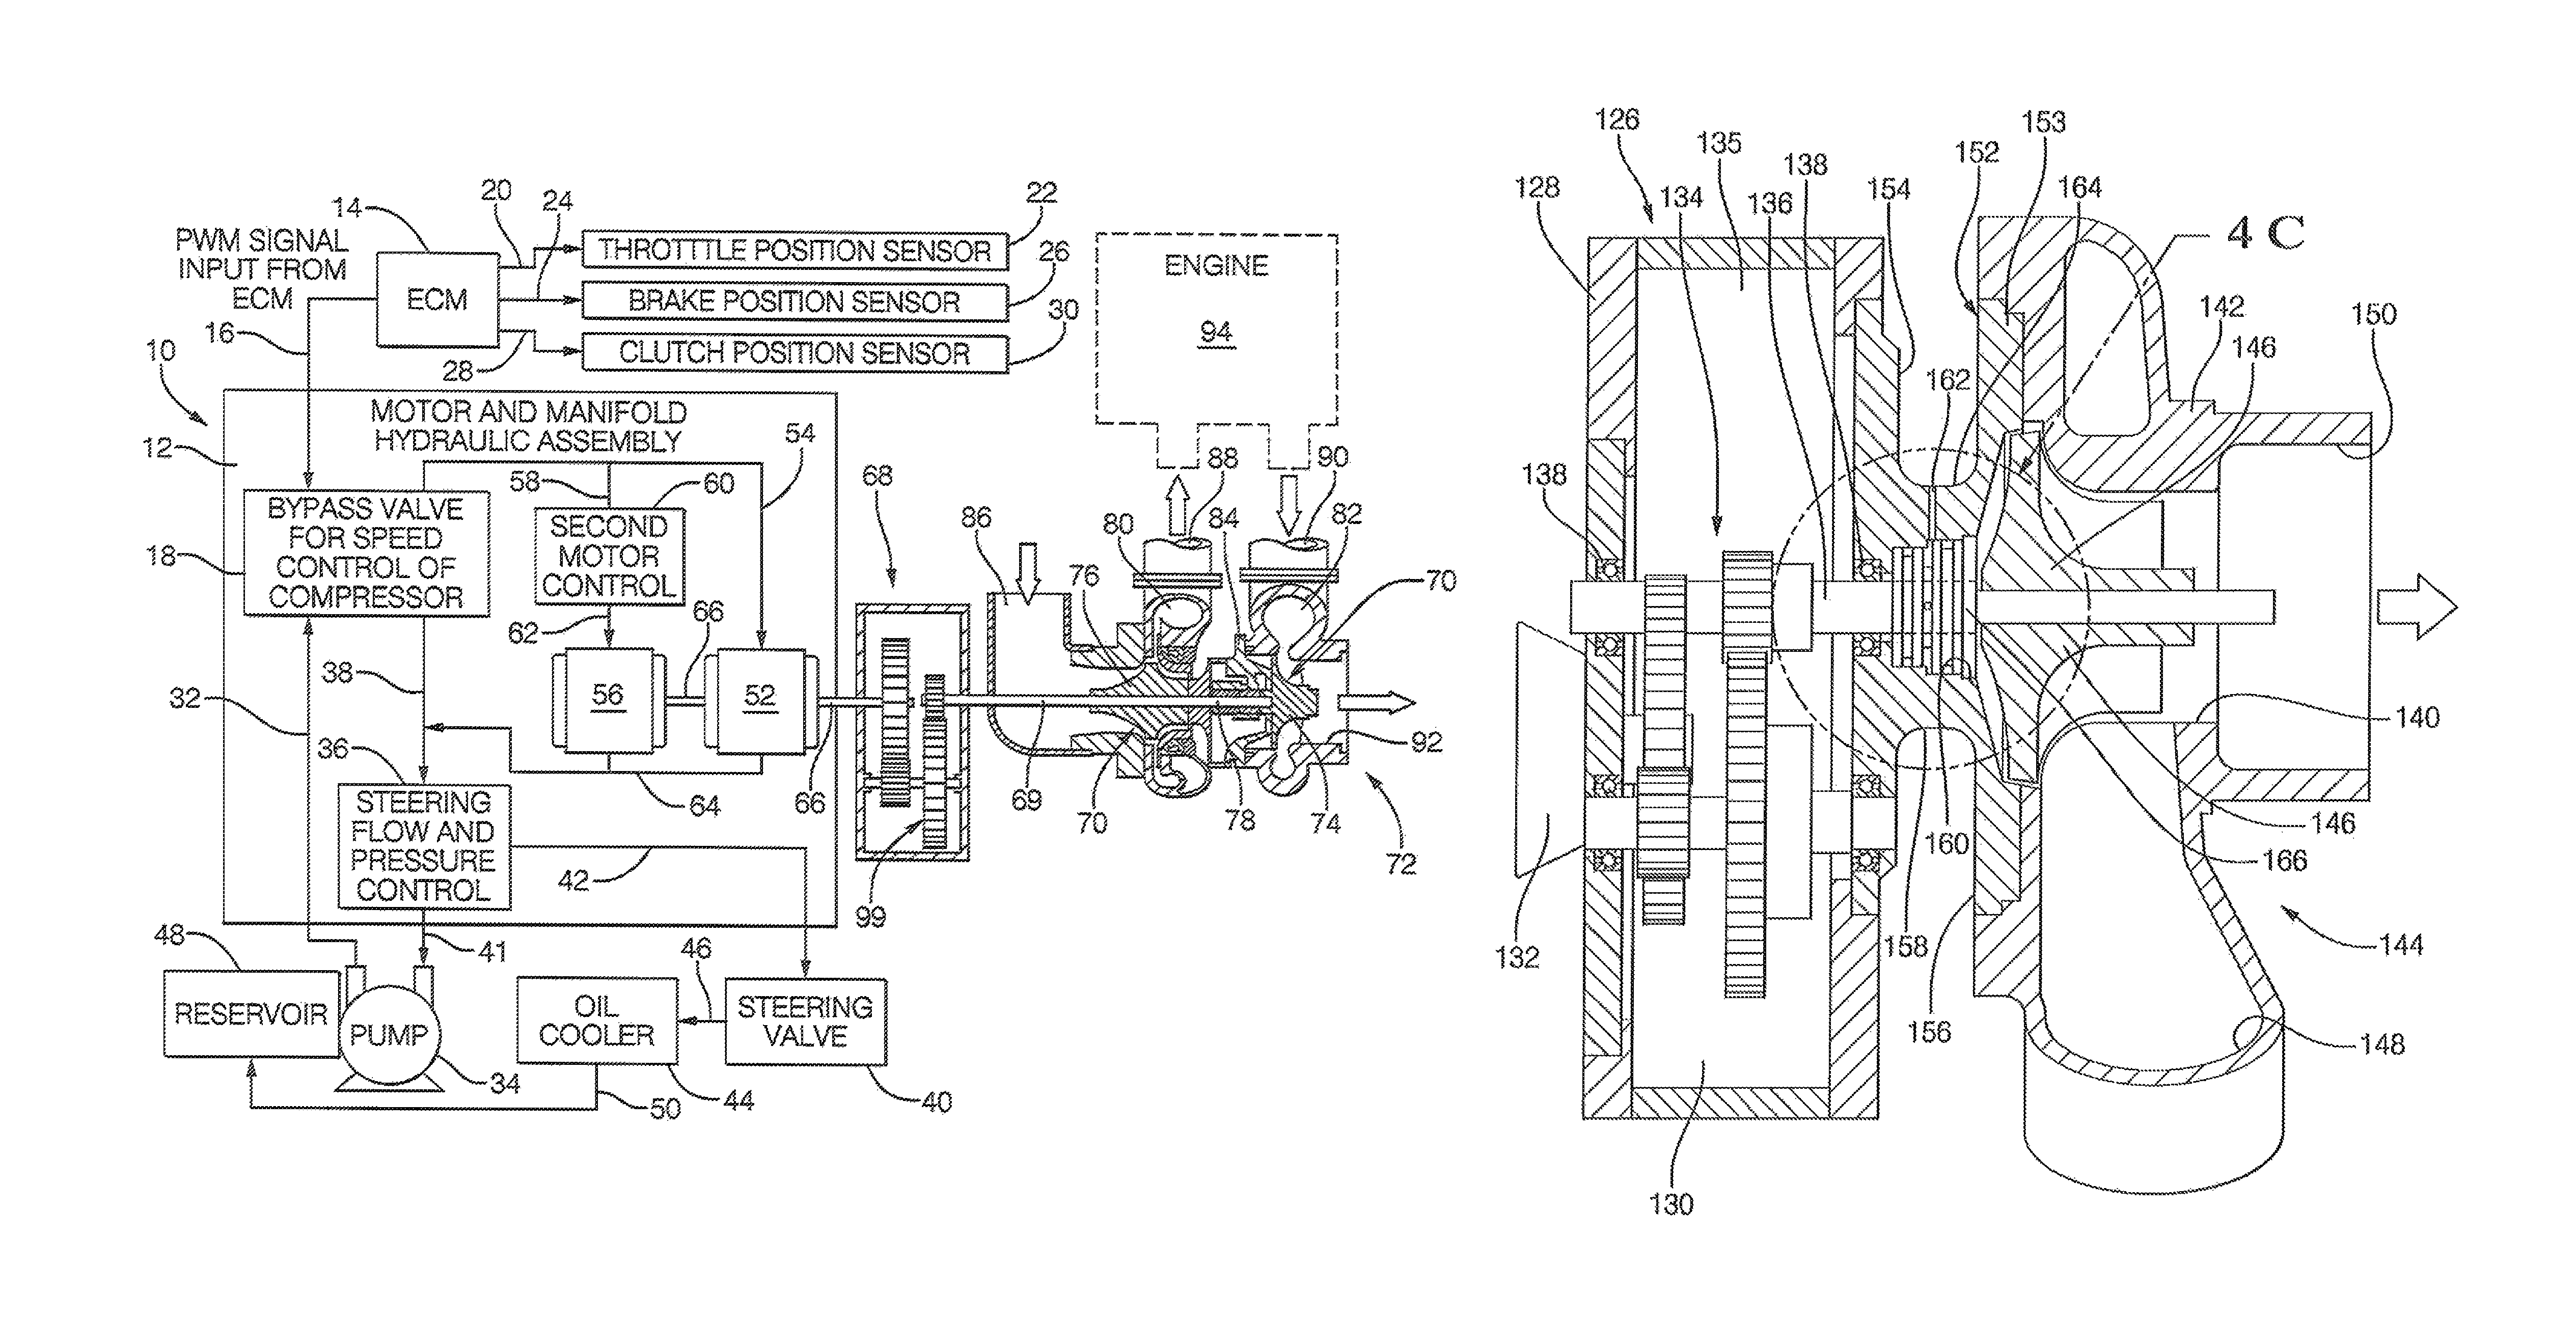 Hydraulic turbo accelerator apparatus